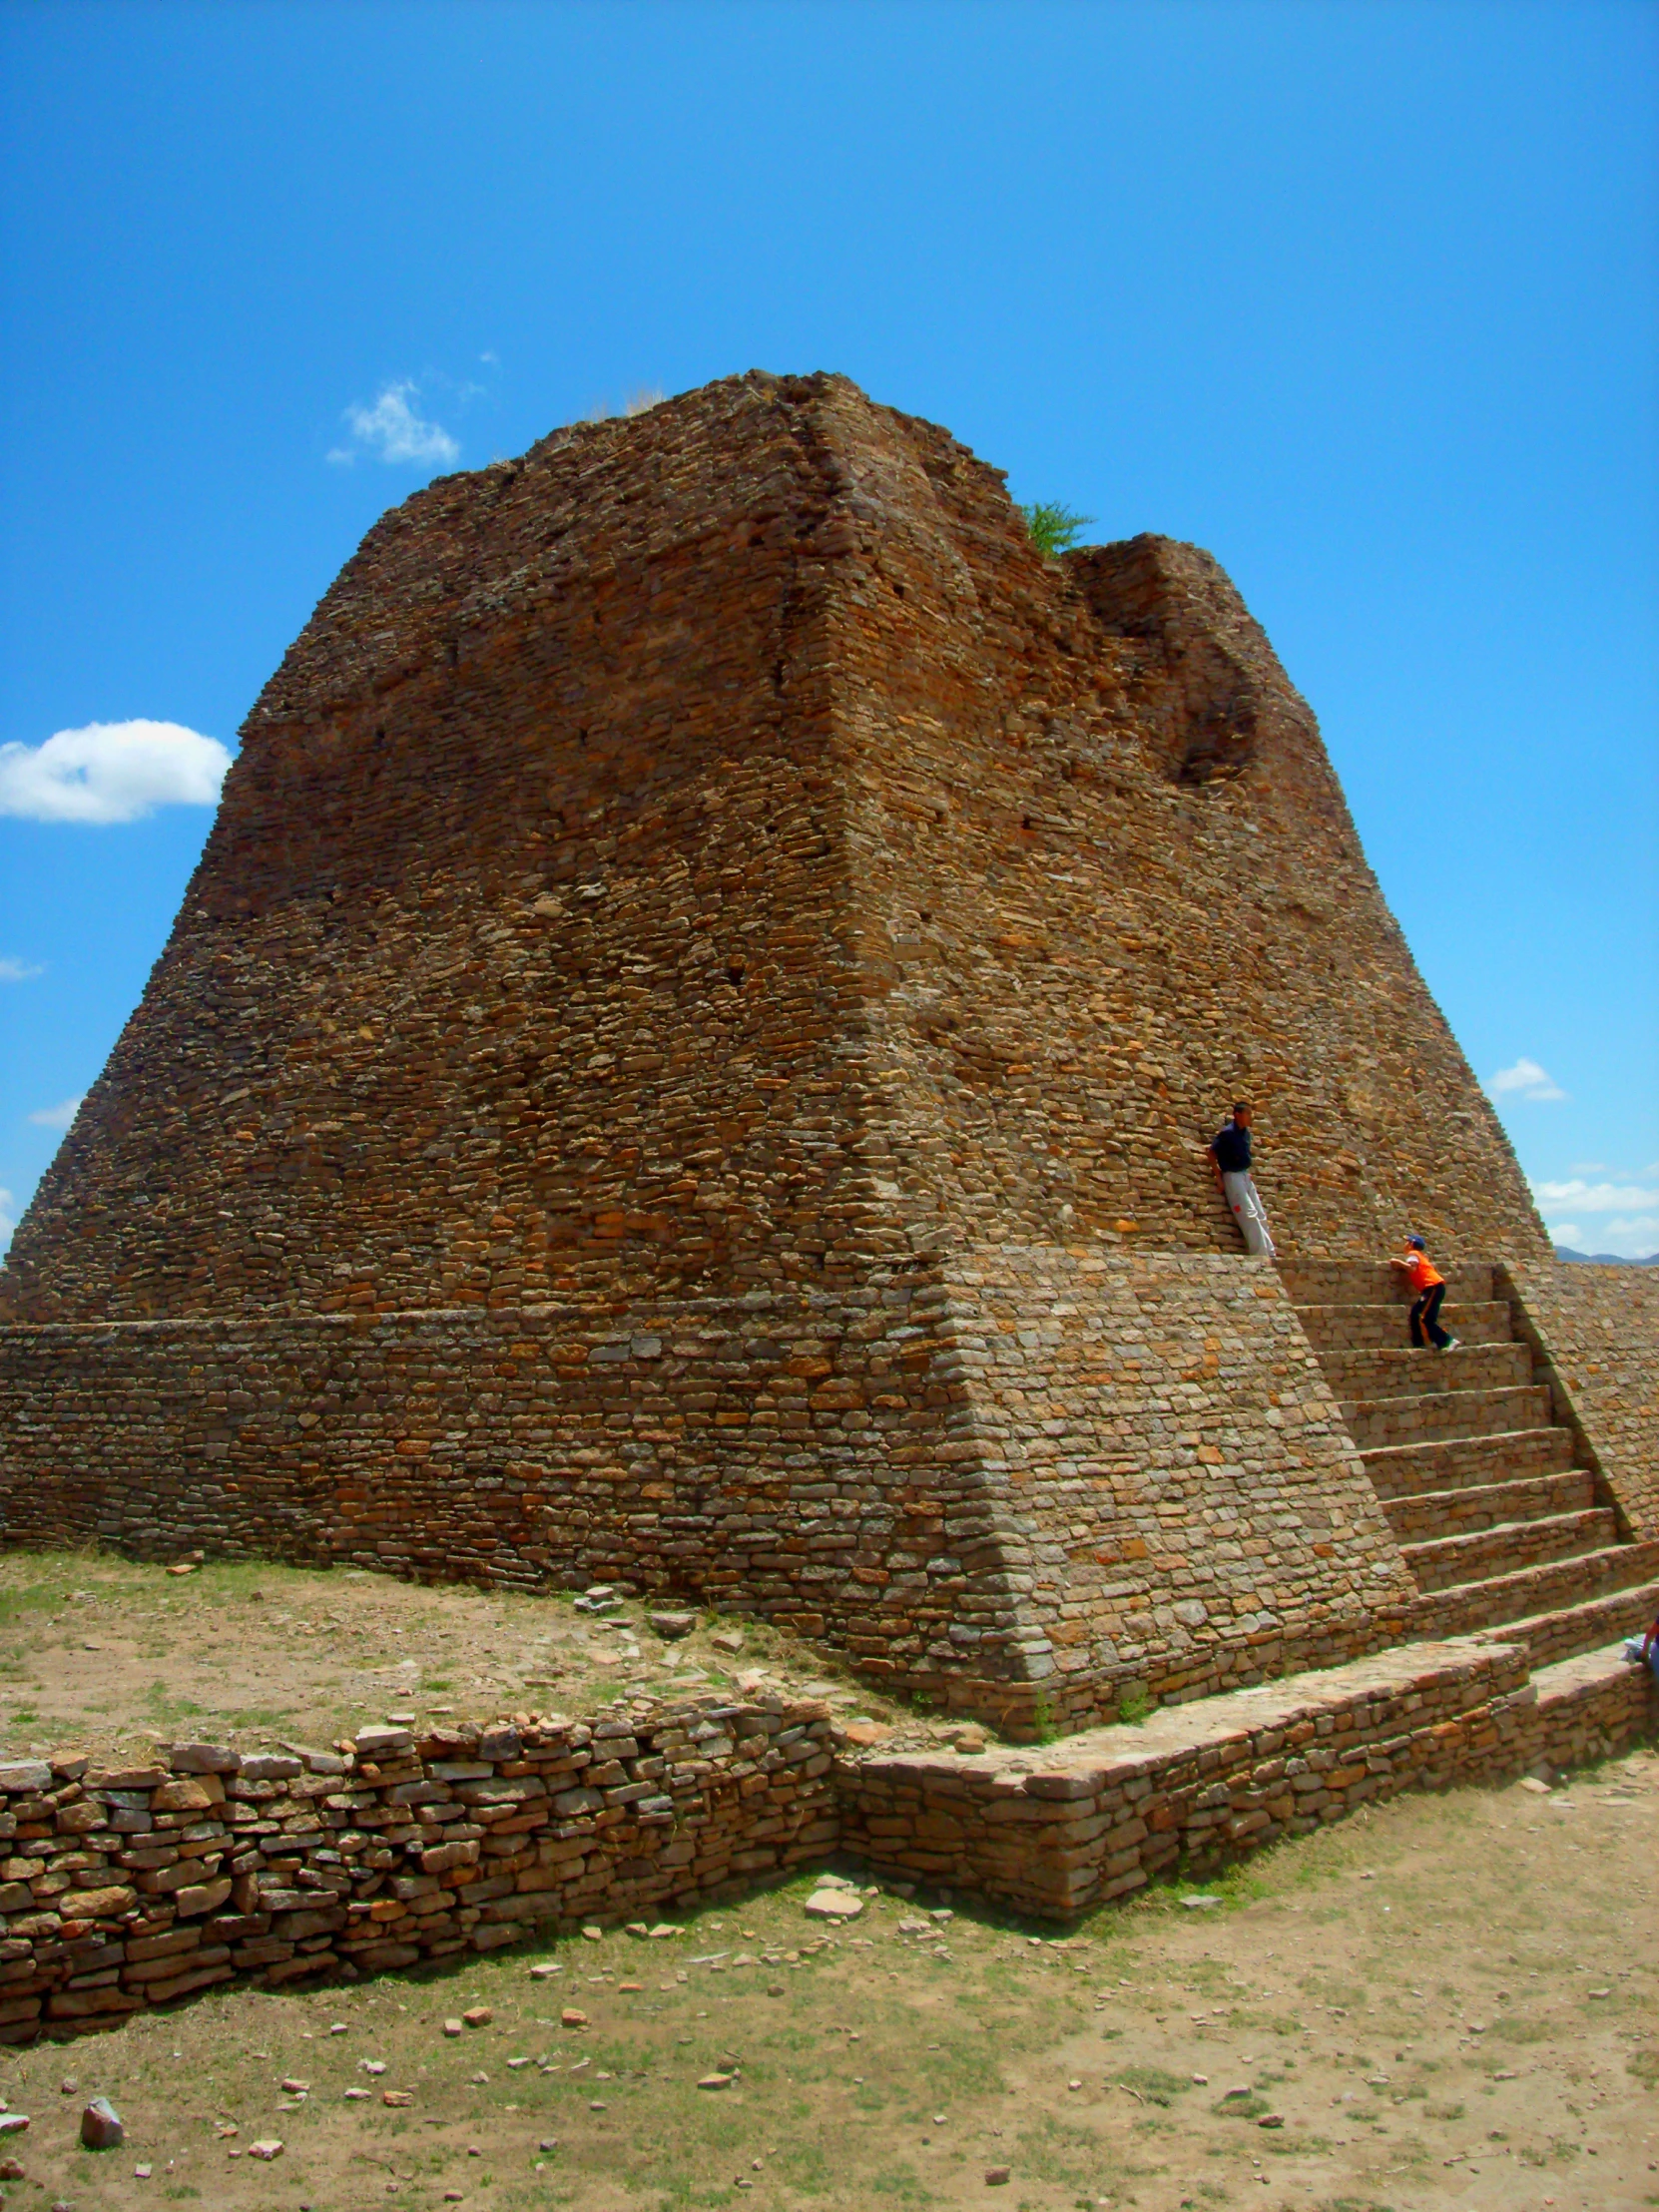 people climbing up a small, stone pyramid